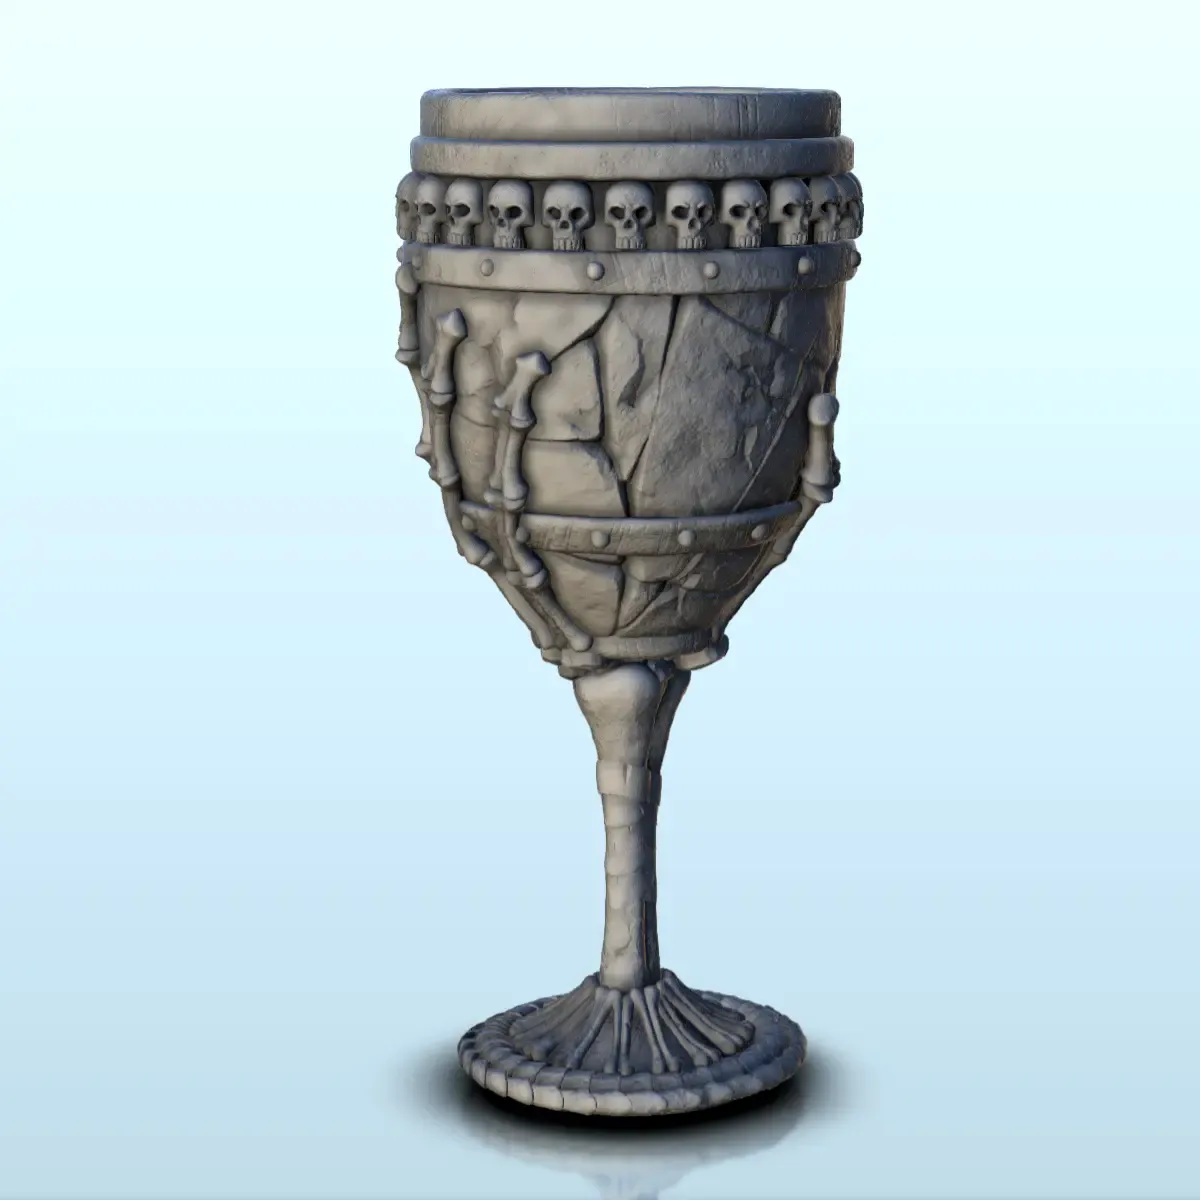 Bone dice mug (11) - beer can holder